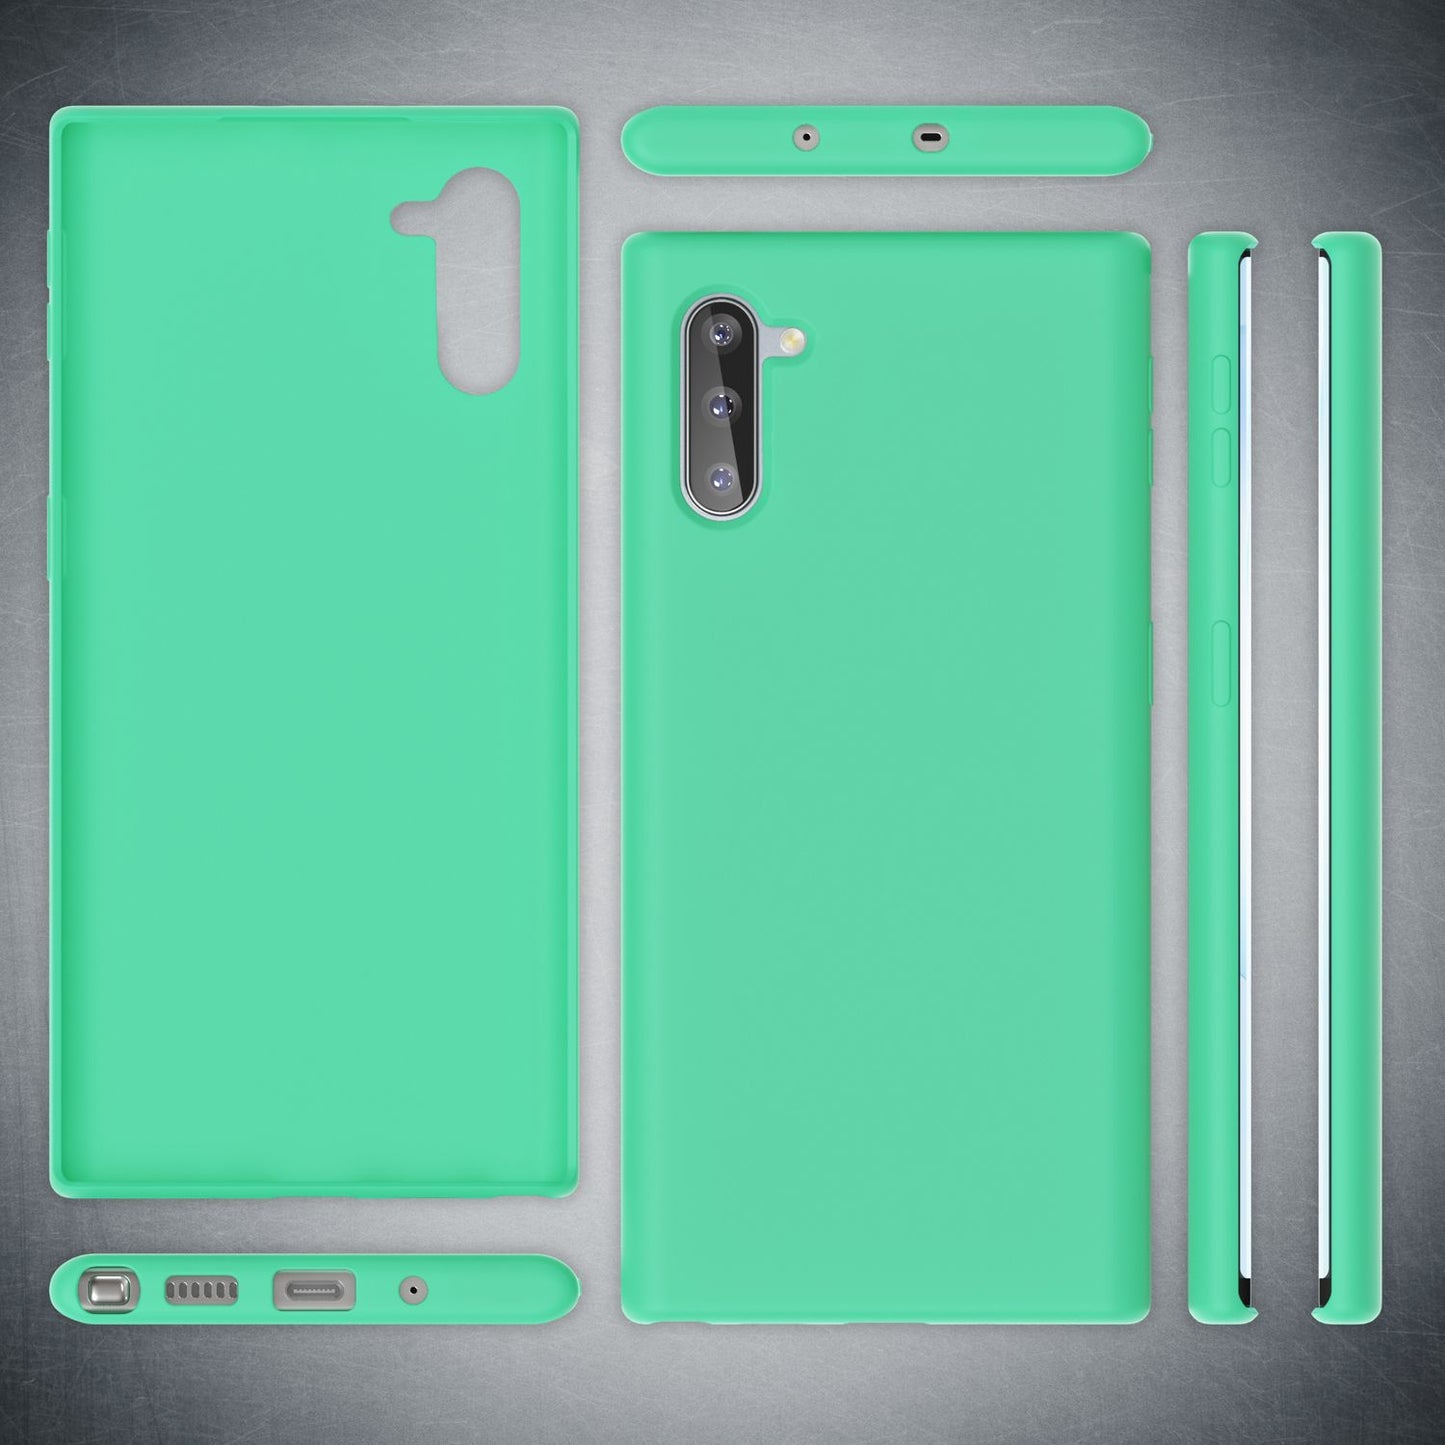 NALIA Neon Handy Hülle für Galaxy Note10, Soft case & Silikon Bumper Cover